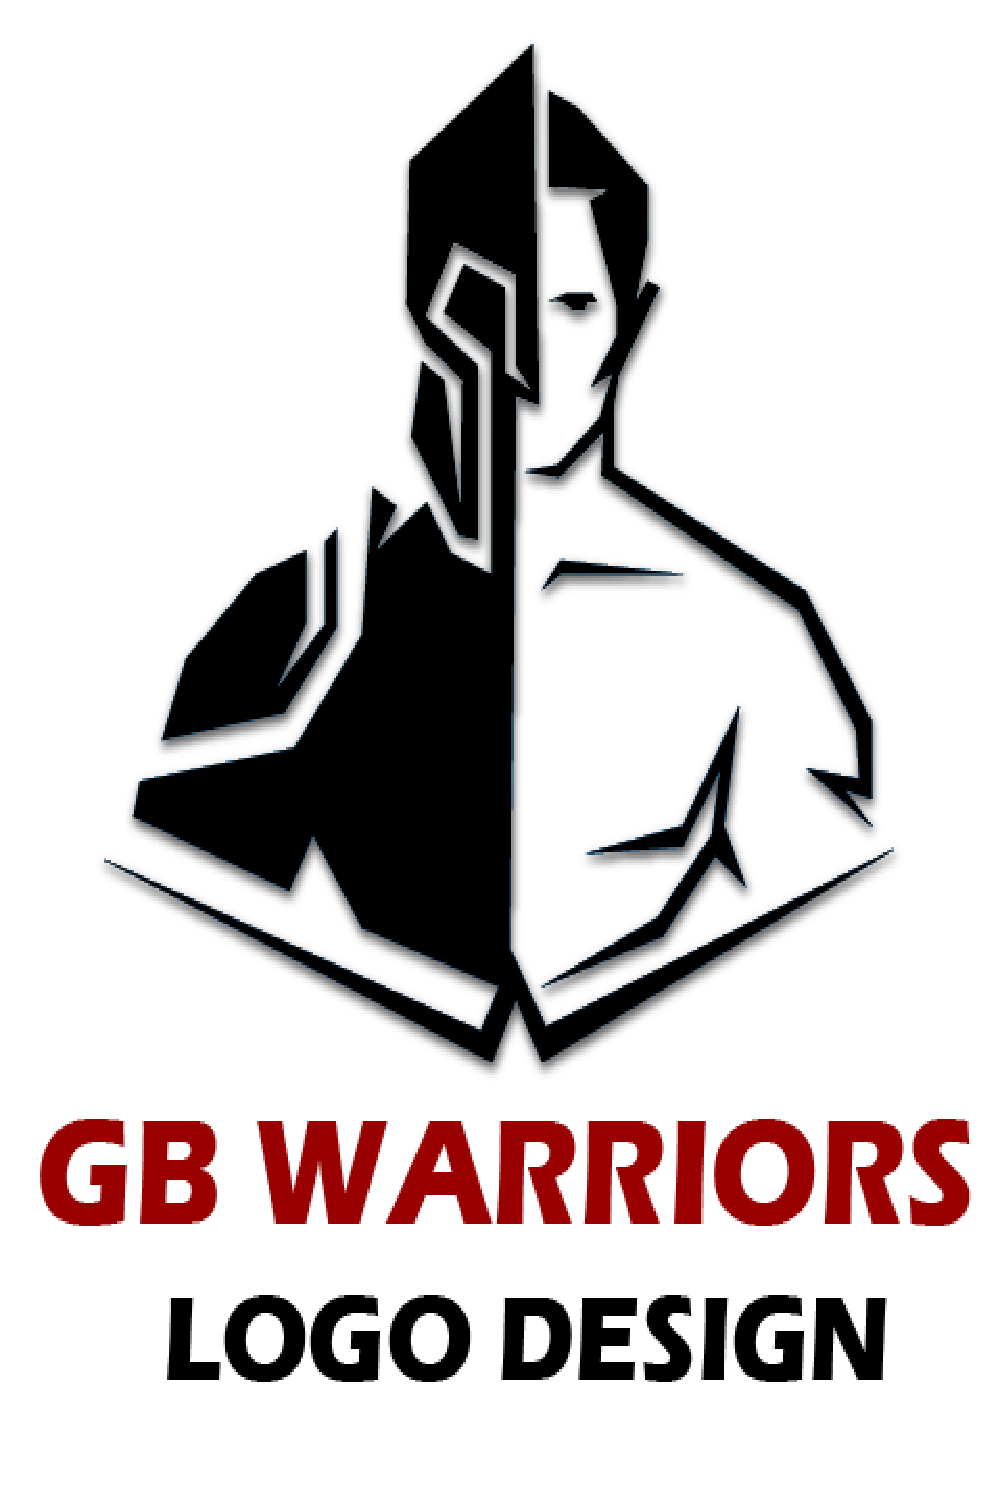 "GB Warriors Logo Design" pinterest preview image.